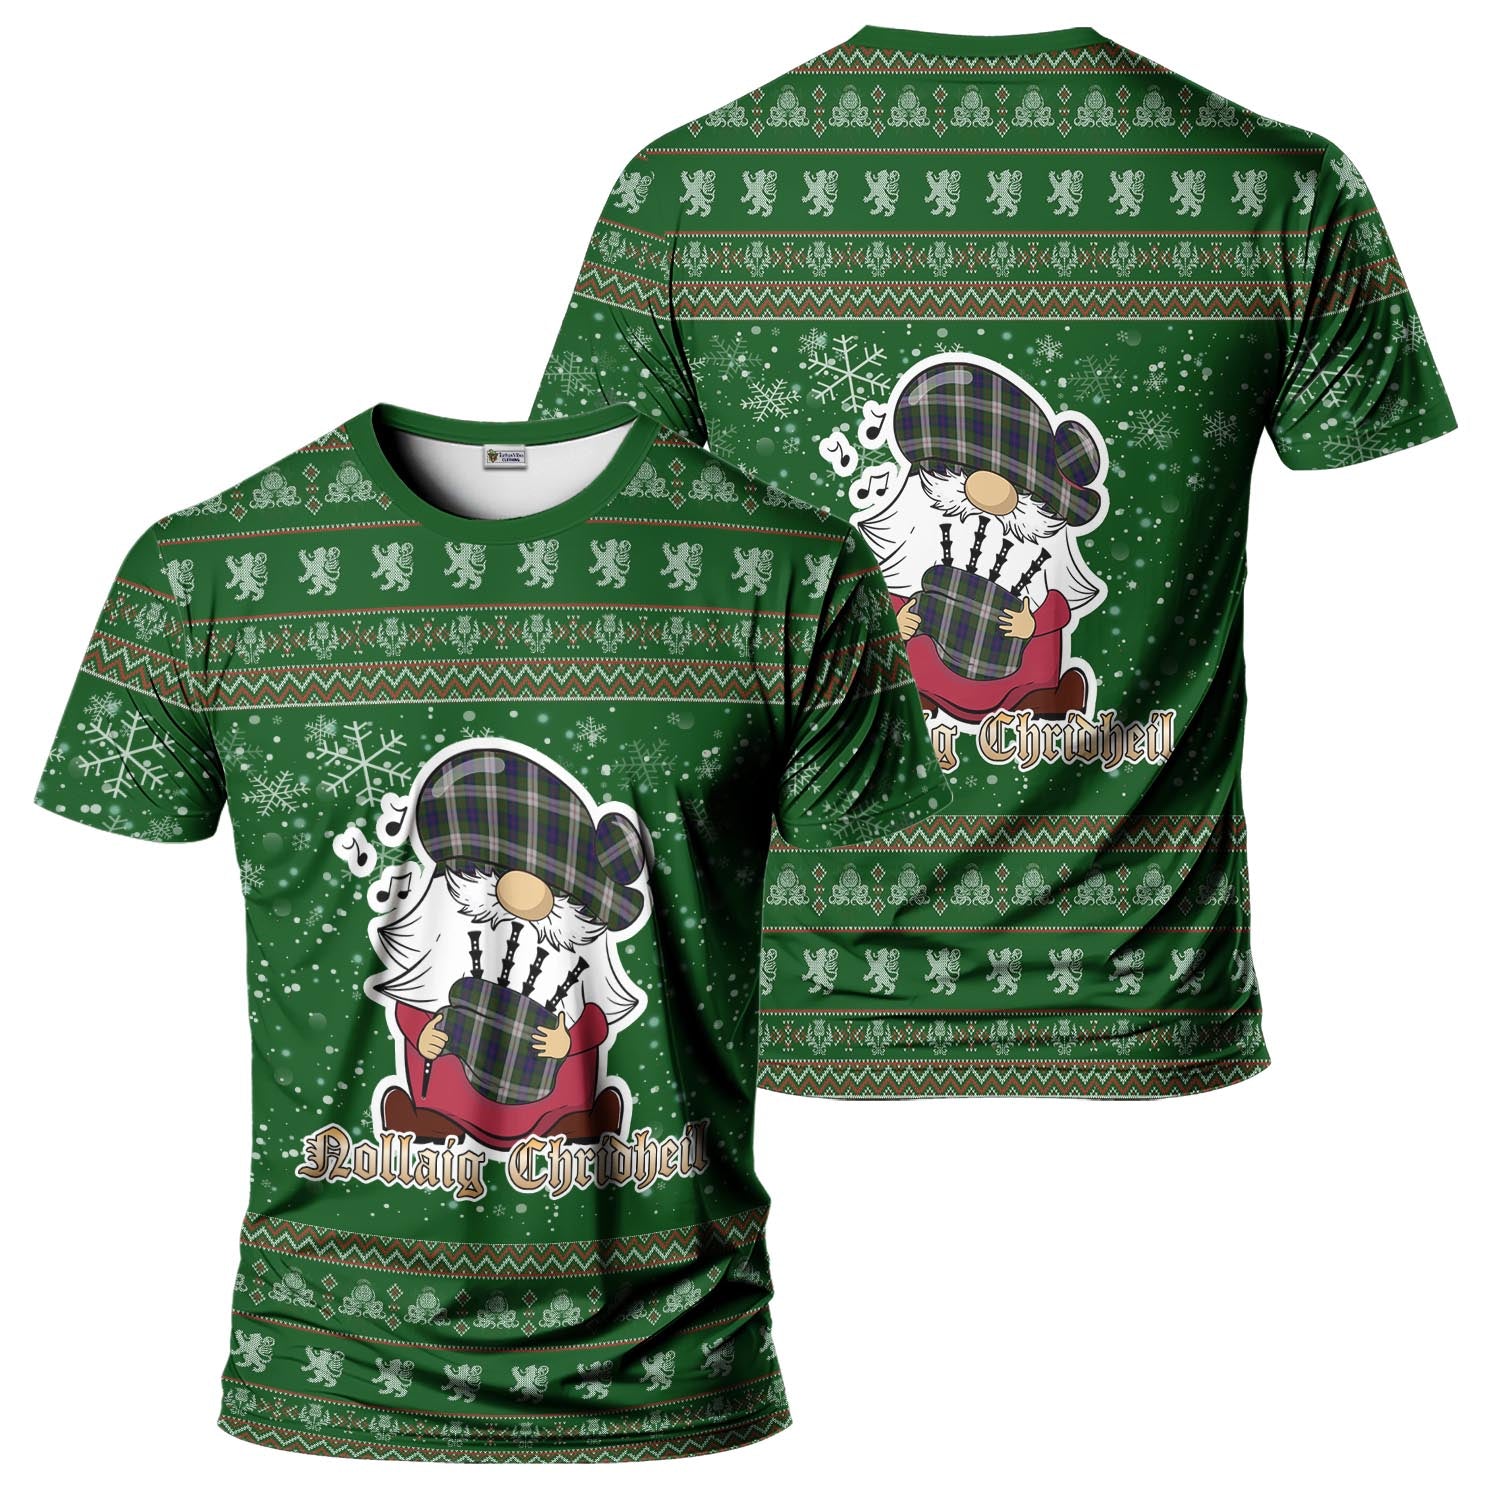 Blair Dress Clan Christmas Family T-Shirt with Funny Gnome Playing Bagpipes Men's Shirt Green - Tartanvibesclothing